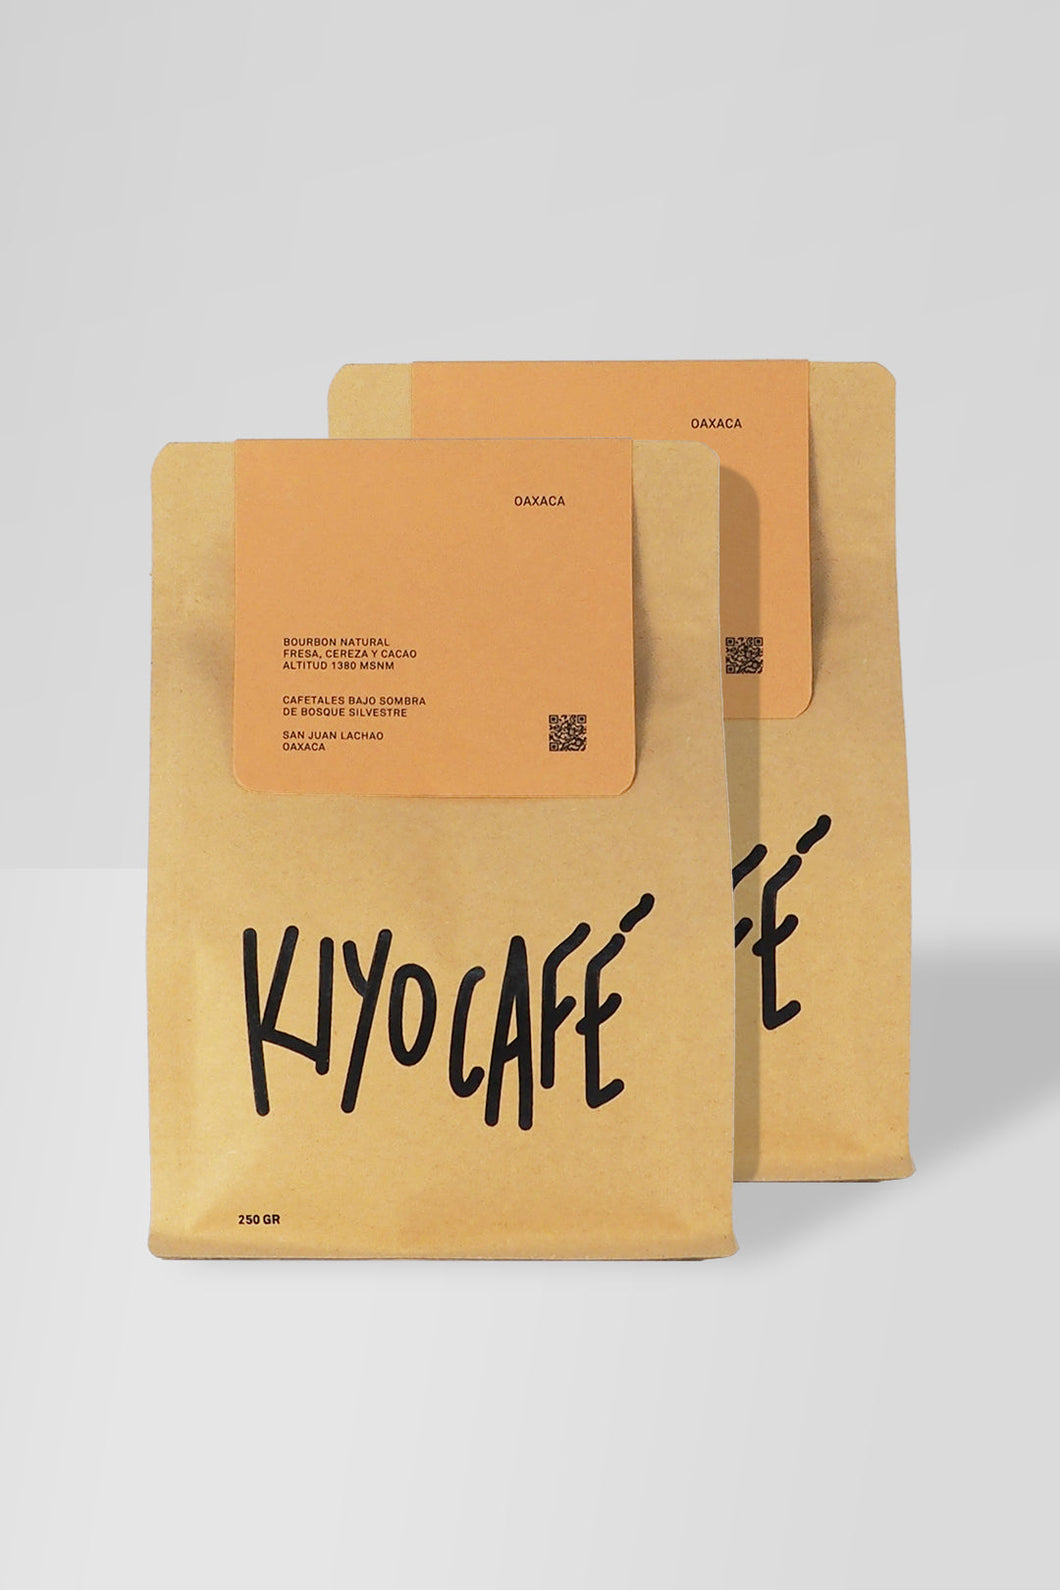 Kiyo Café Club Suscription + Worldwide Shipping